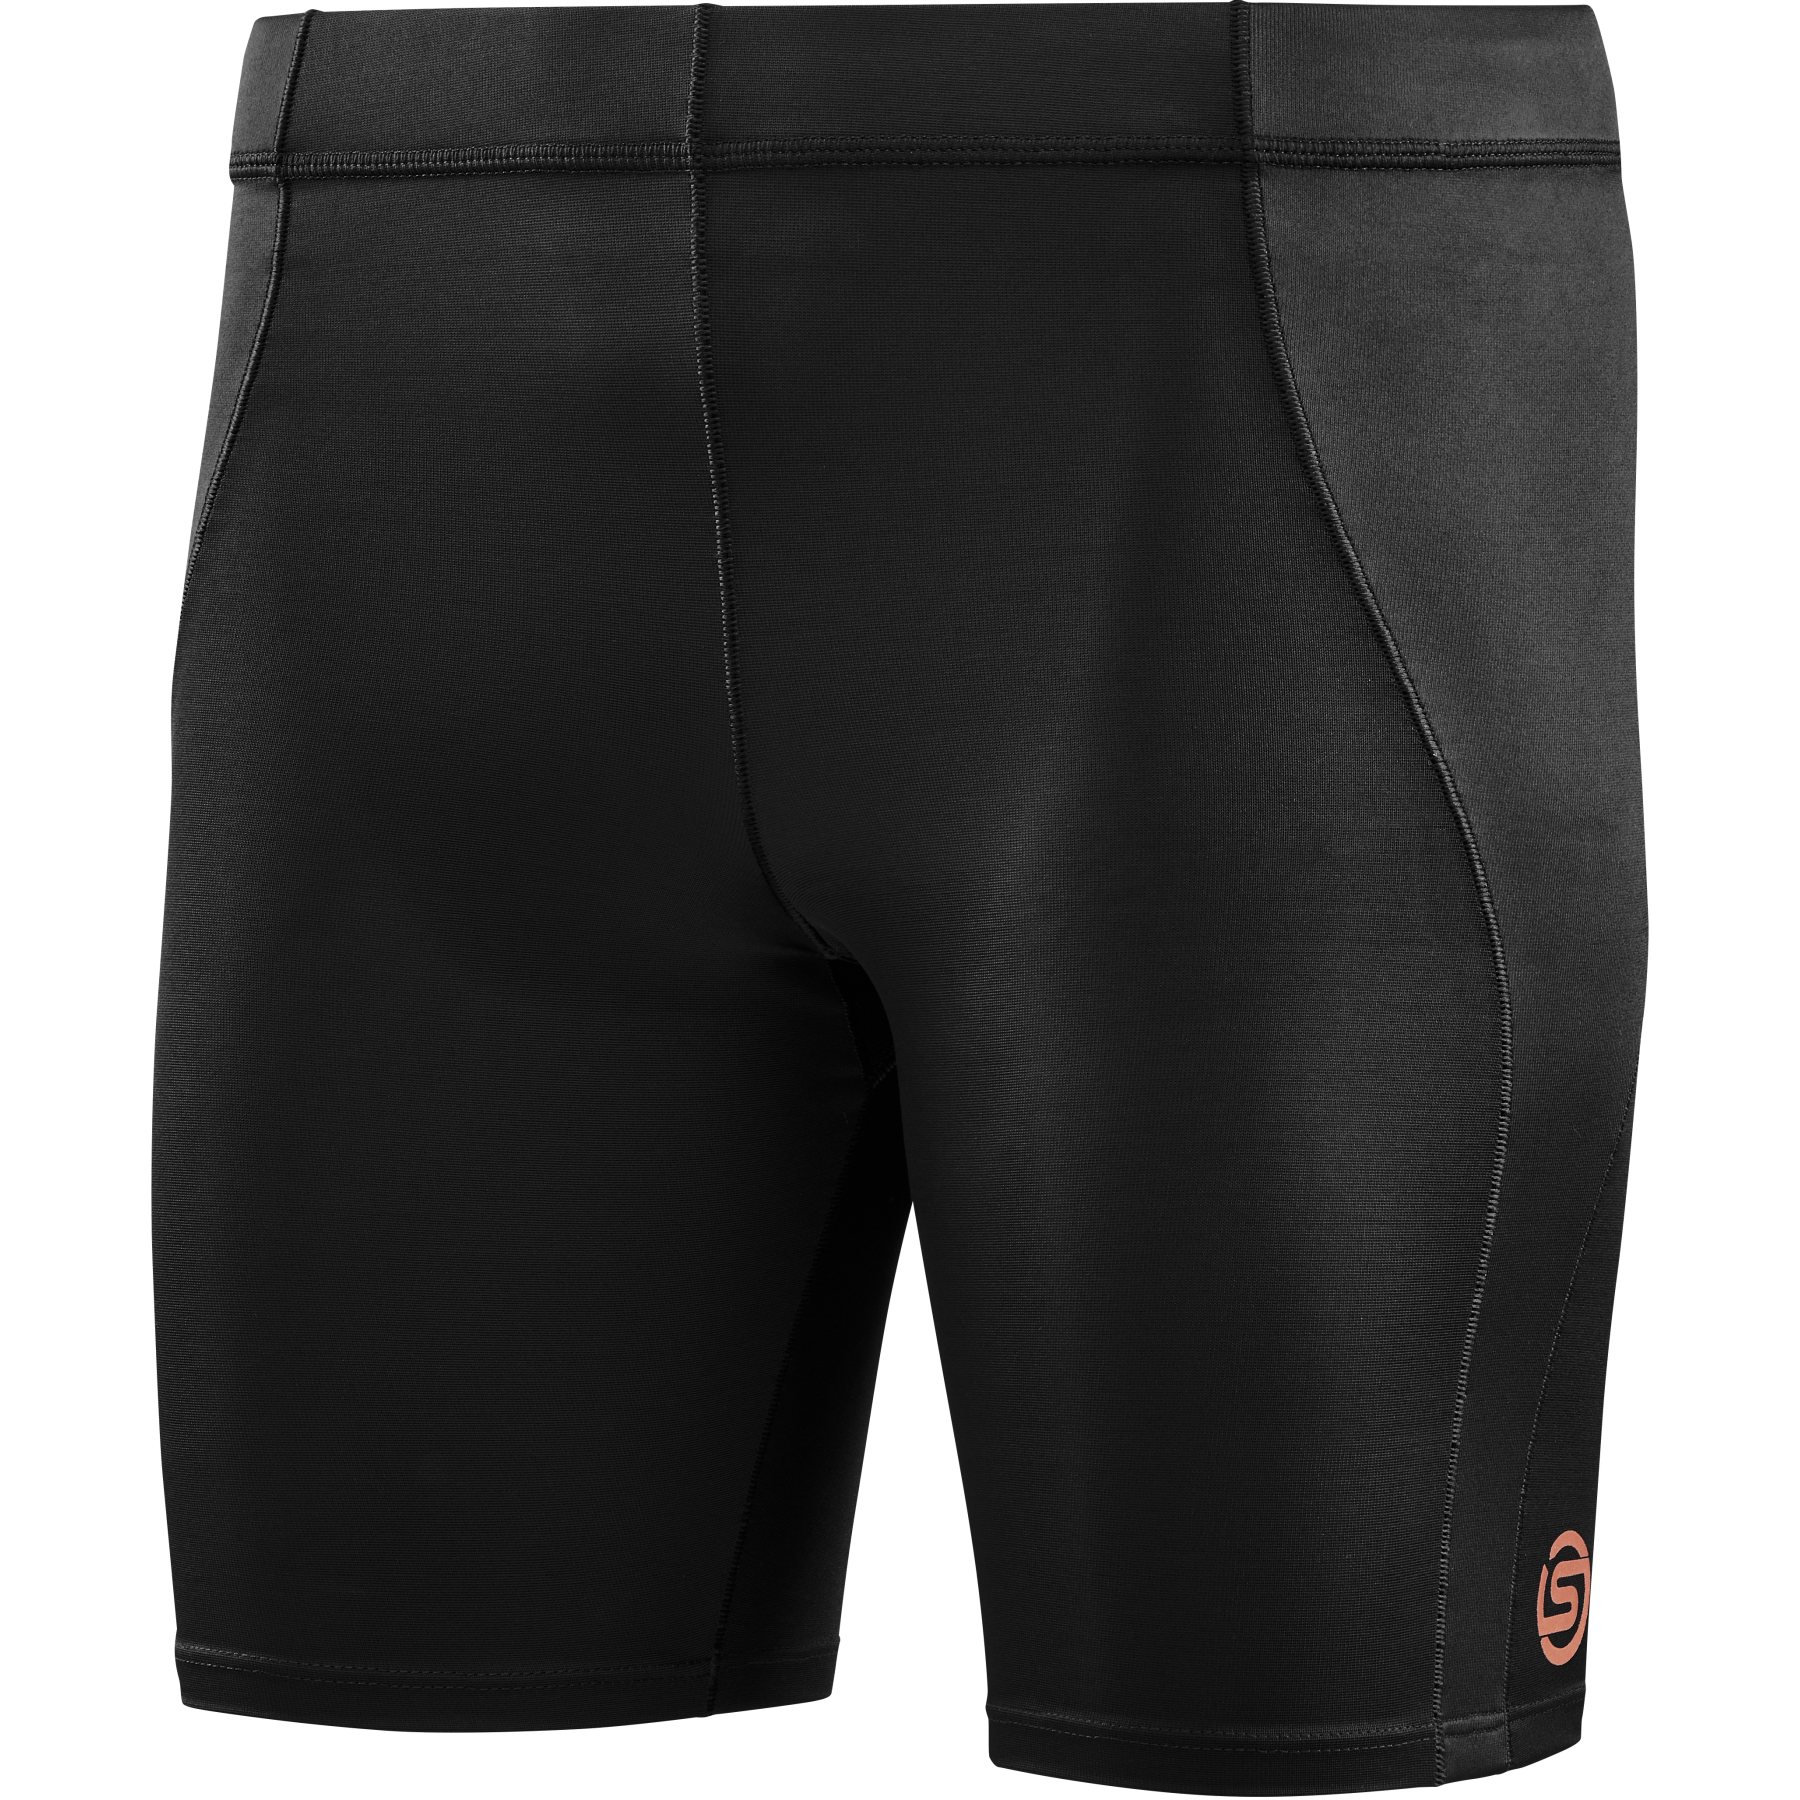 Skins A400 Womens Active Compression Shorts: Black: XL